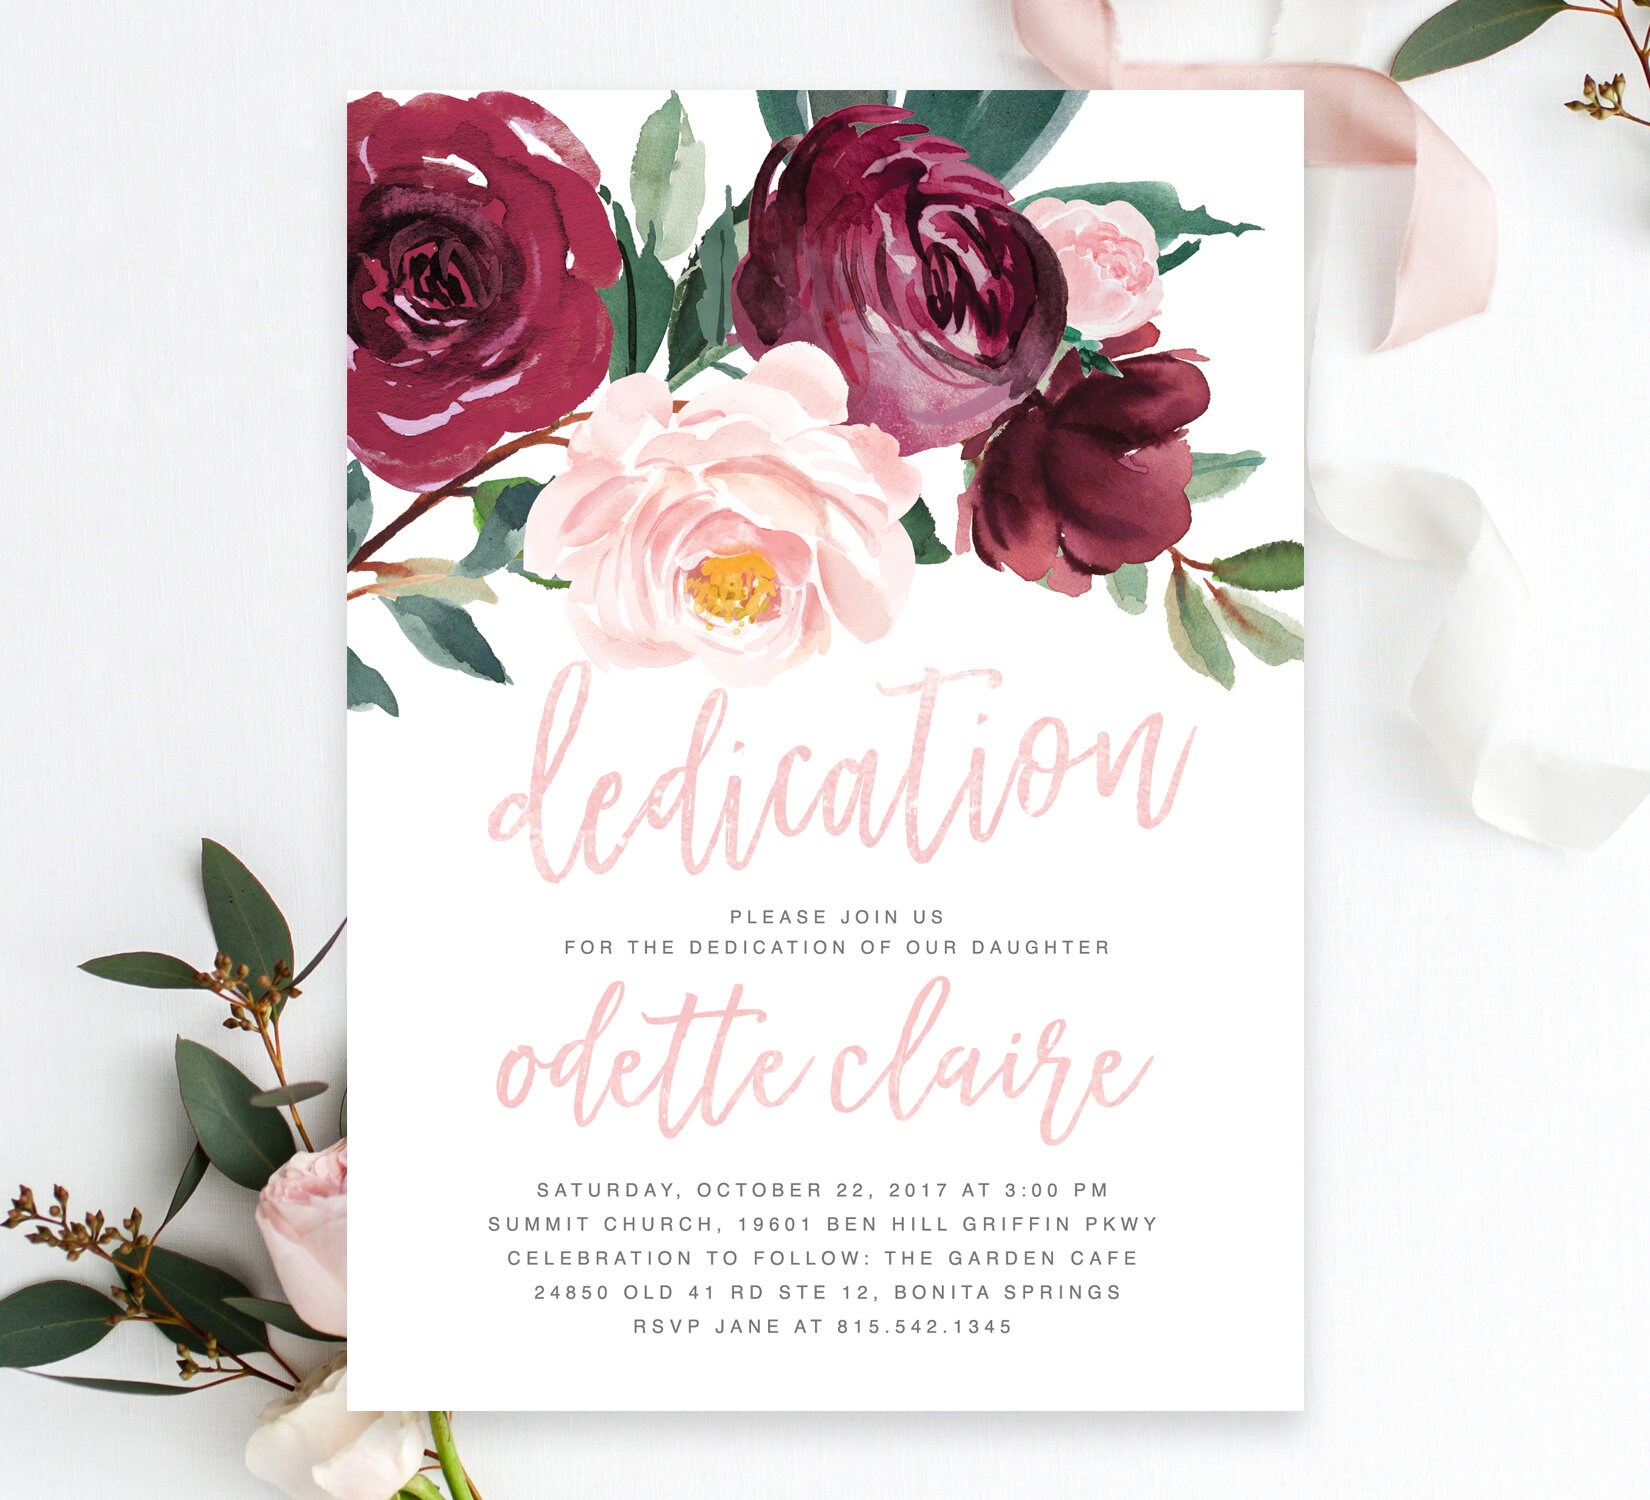 Dedication Invitation Girl, Girl Invite, Floral Invitation, Blush Pink & Burgundy Flowers, Greenery - Pi-O, Odette